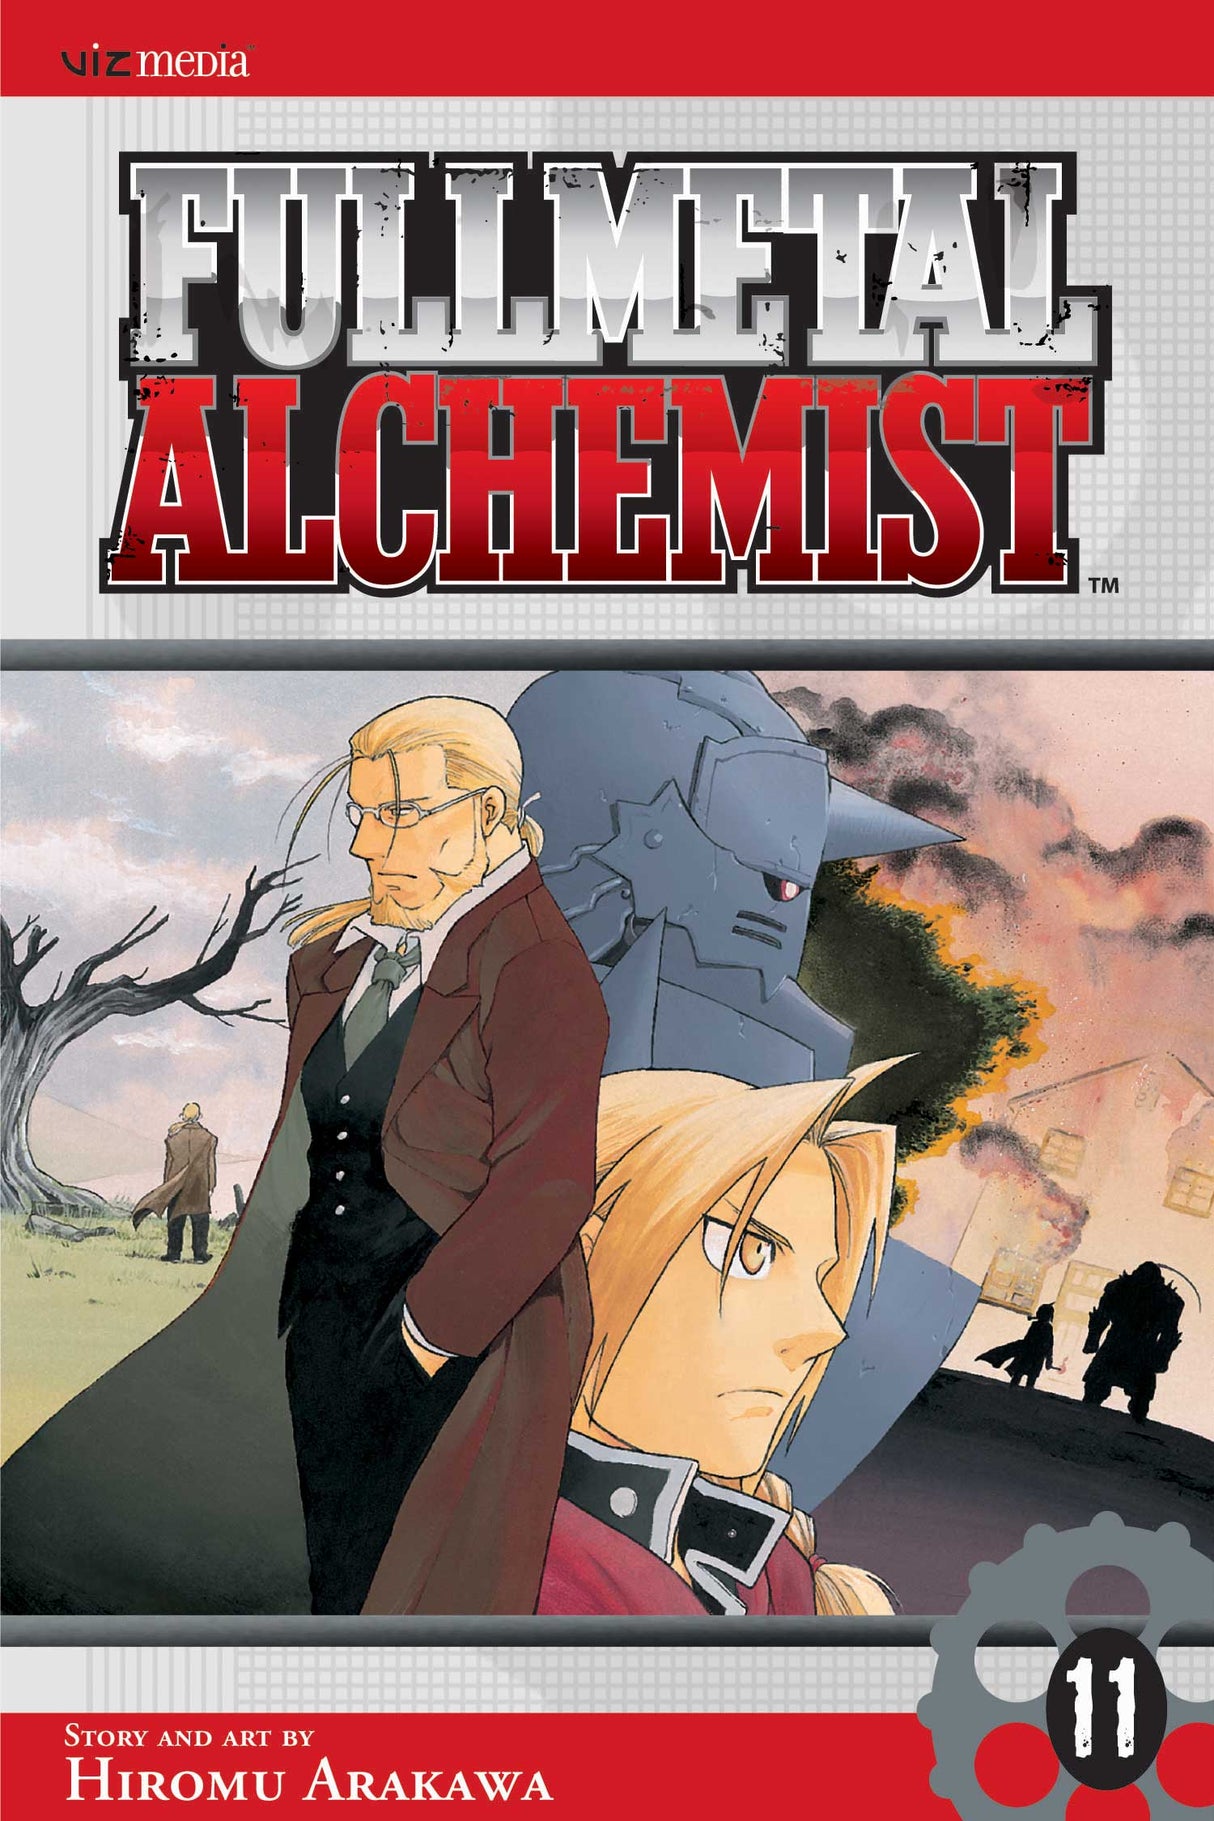 Cover image of the Manga Fullmetal Alchemist, Vol. 11